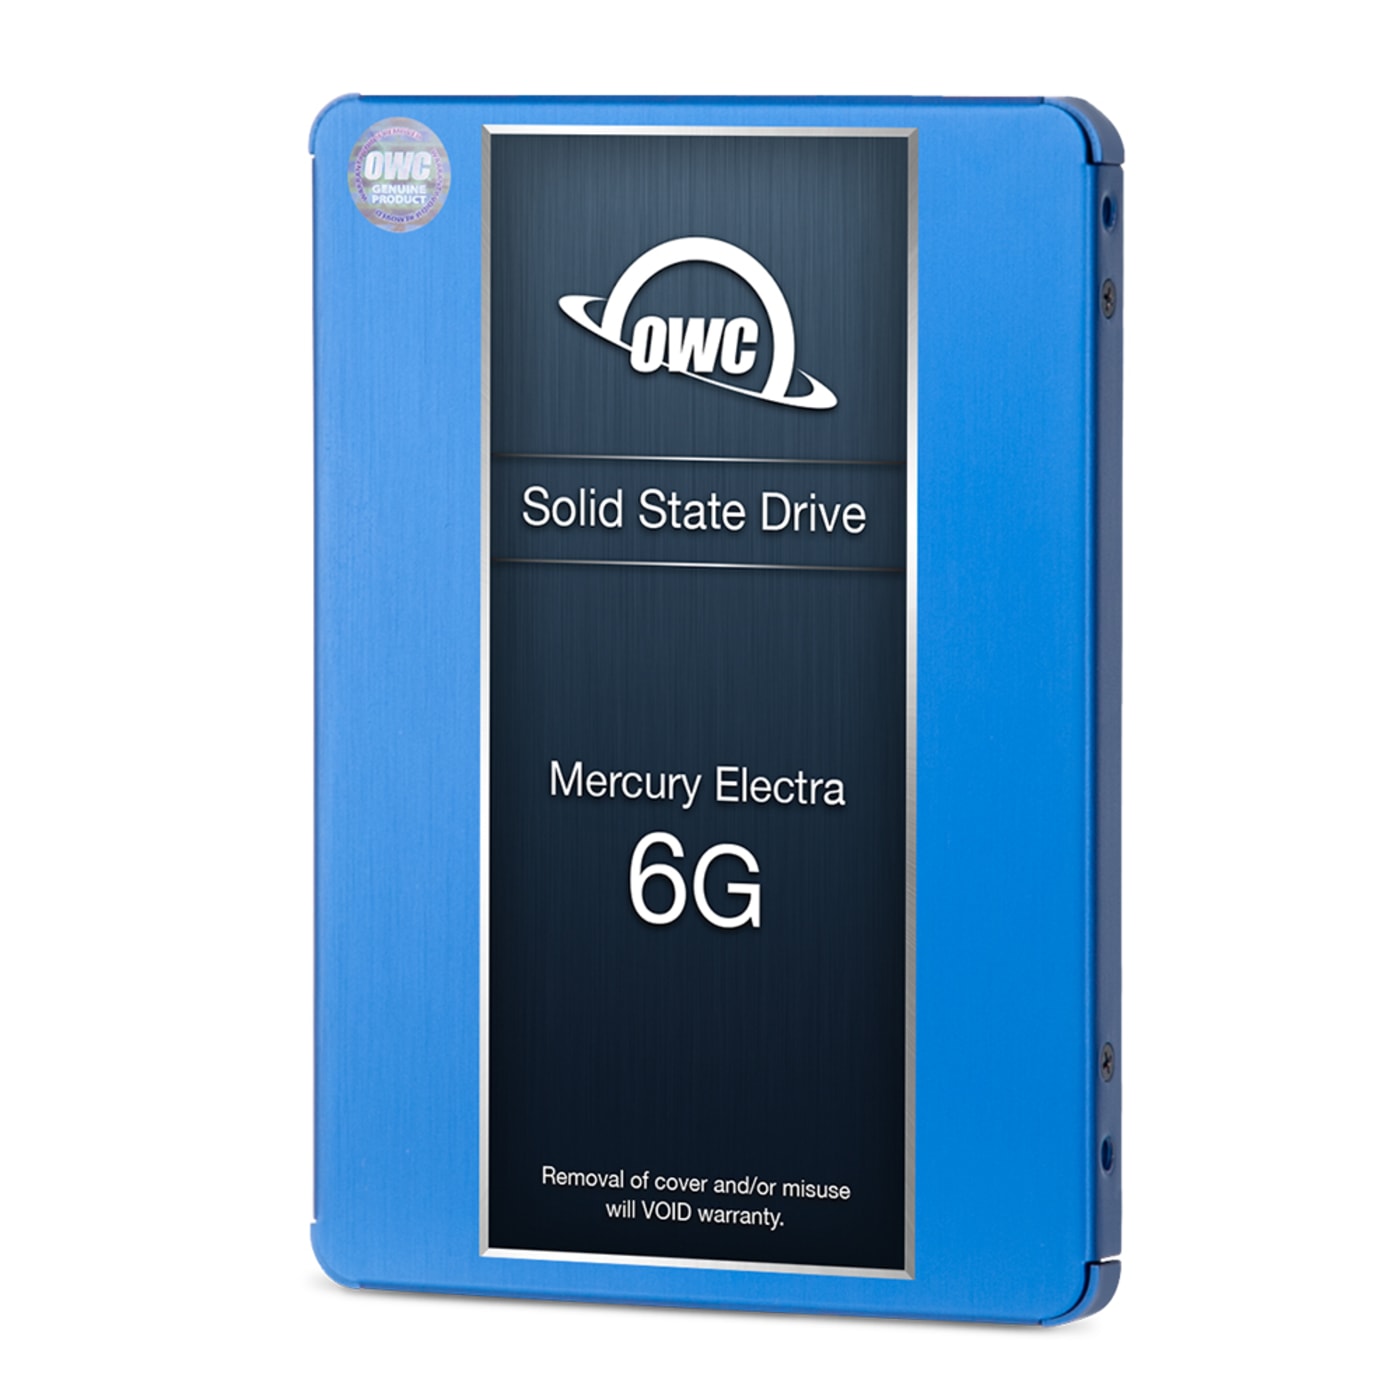 Mercury Electra 3G SSD